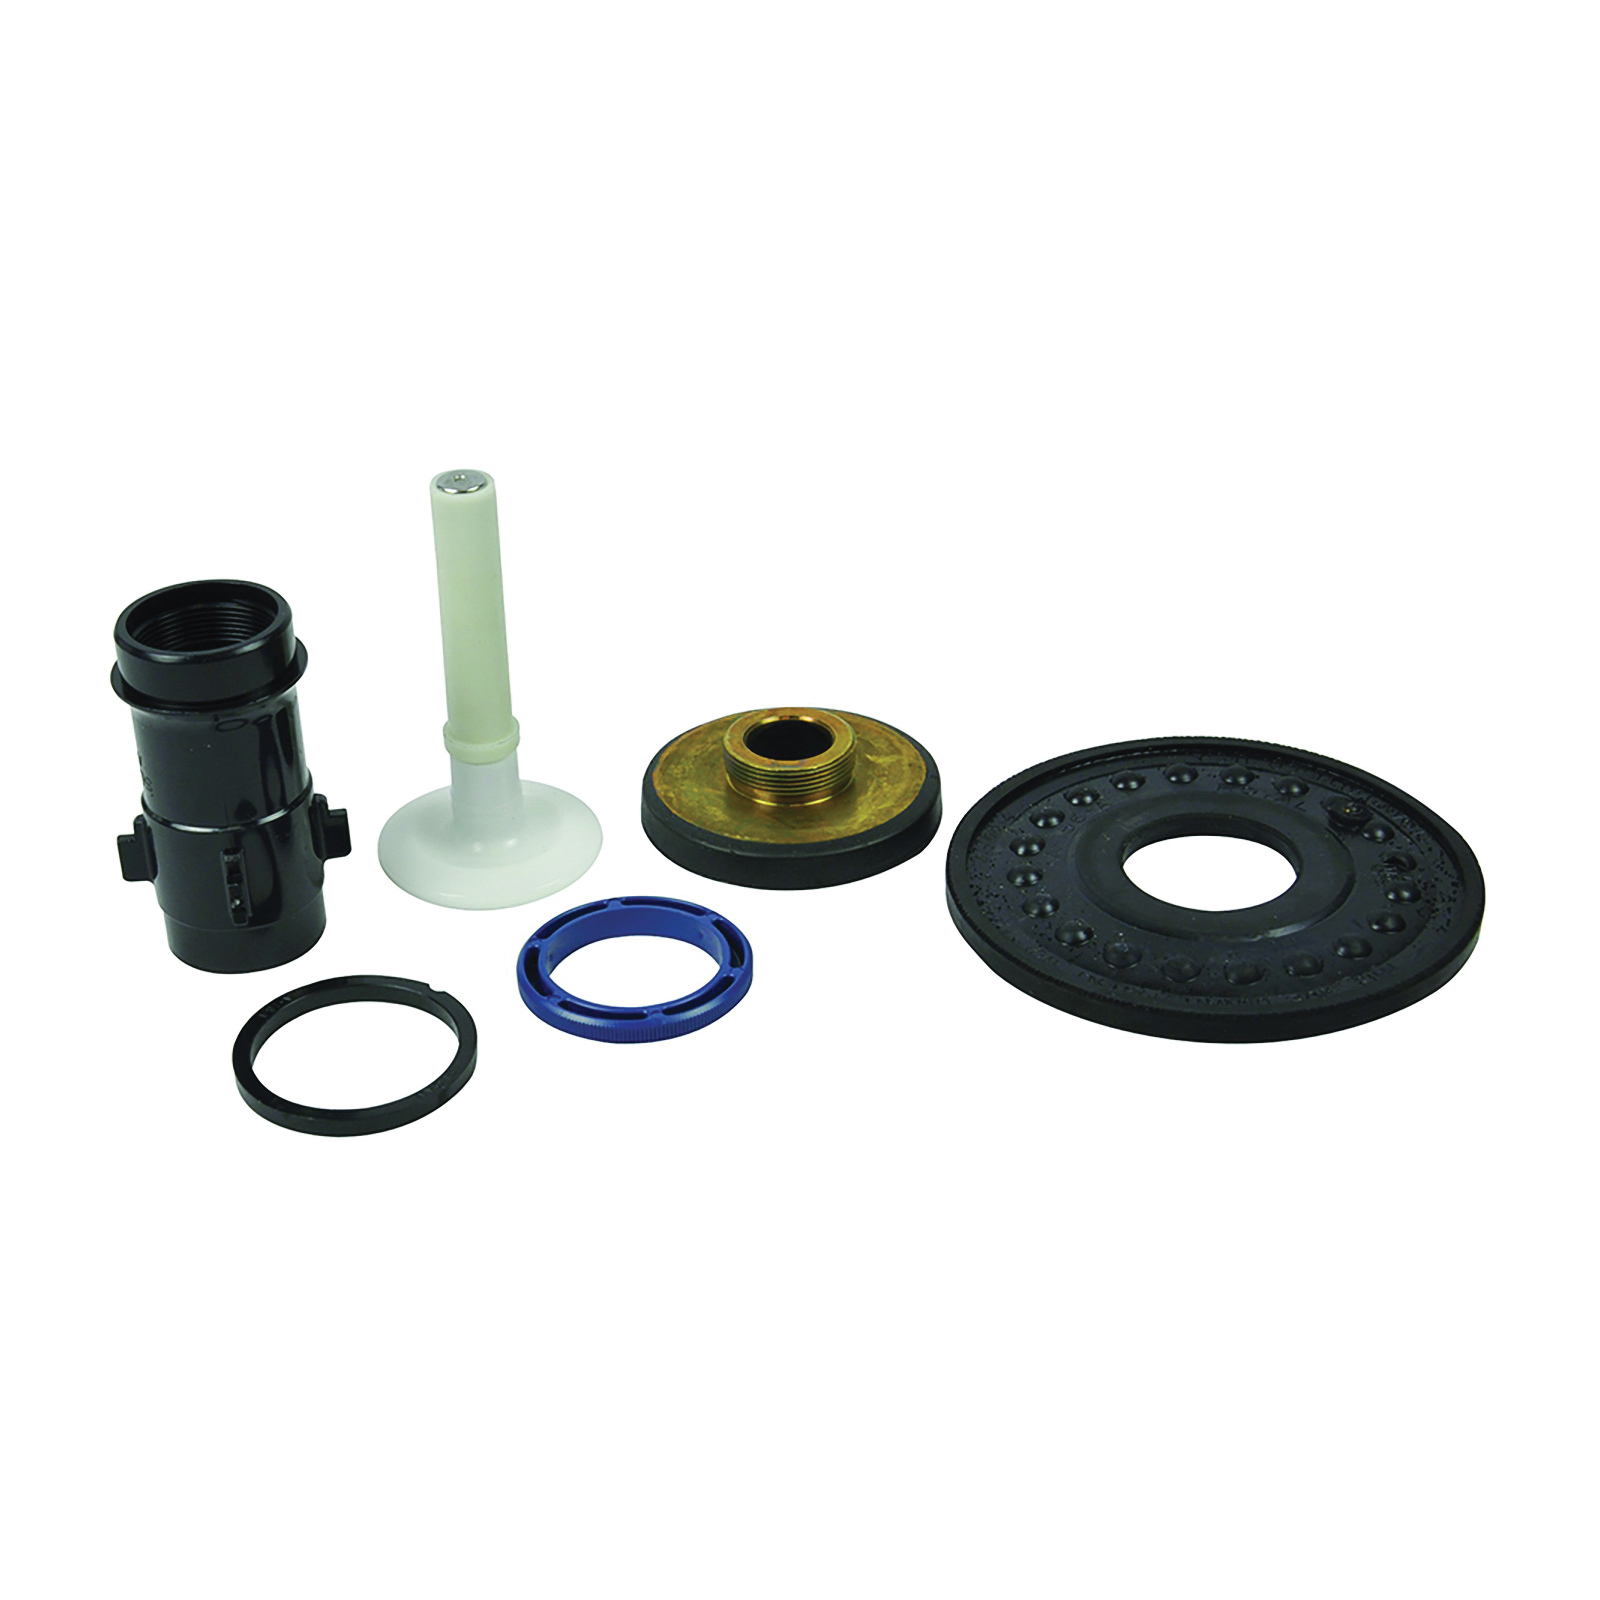 37073 Water Saver Kit, Plastic/Rubber, Black, For: Regal 3.5 gpf Water Closet Flushometers